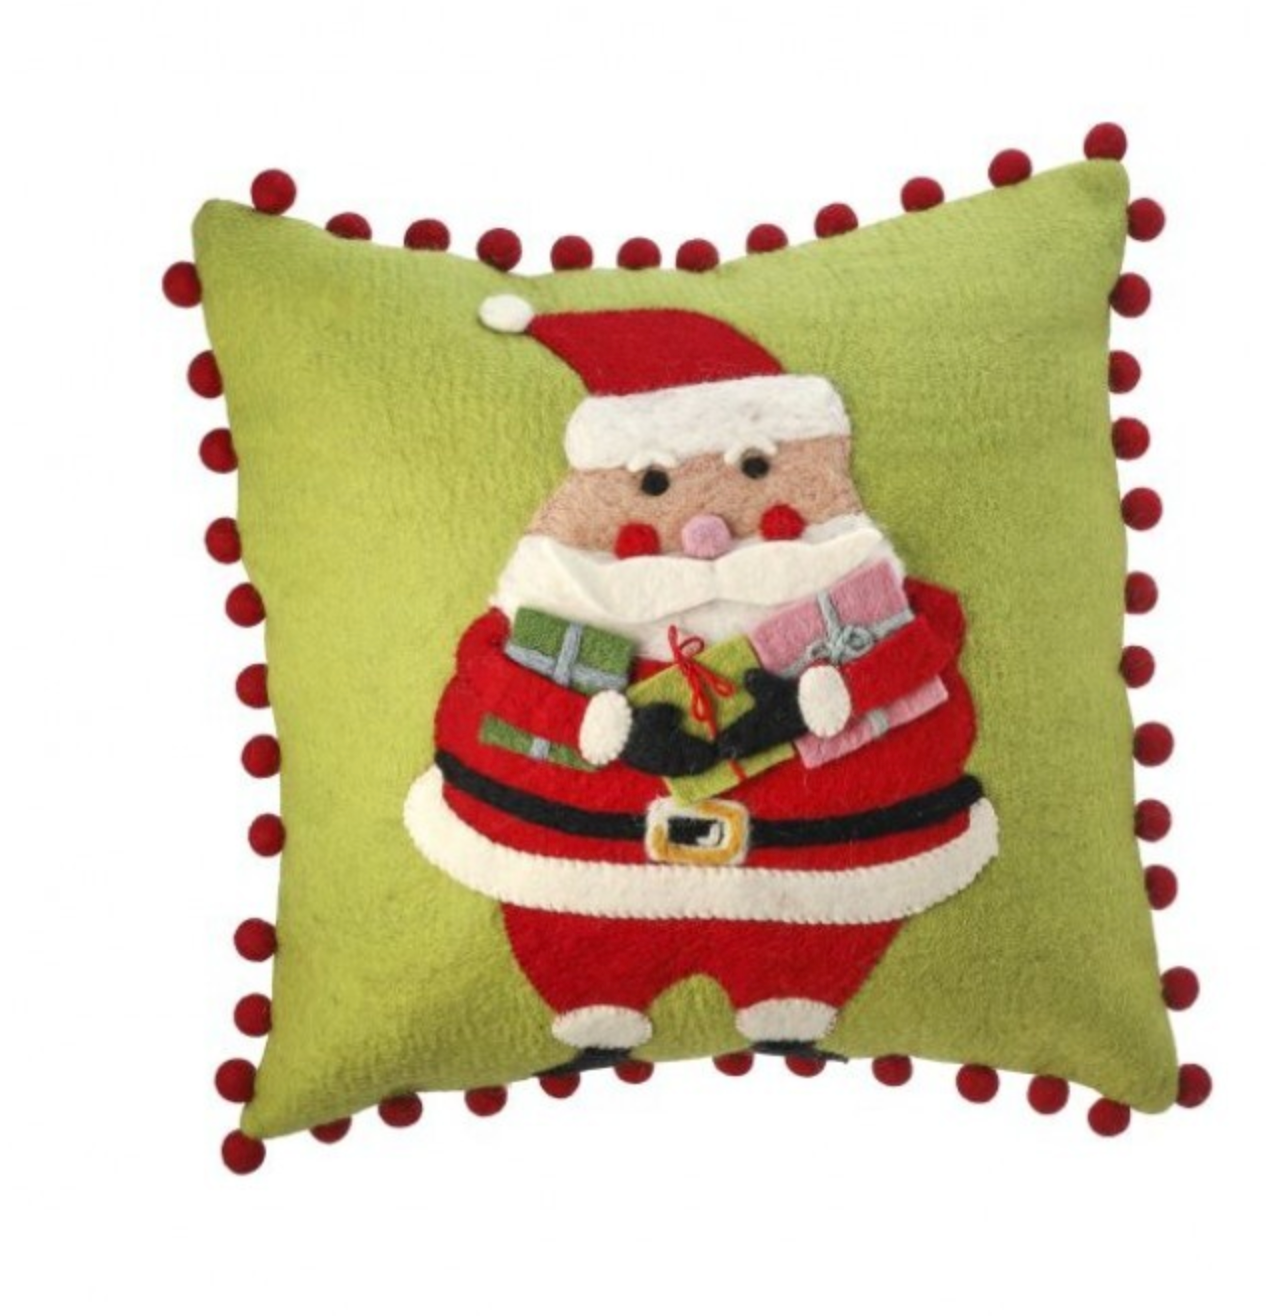 Green Felt Santa Pillow with Red Pom Poms